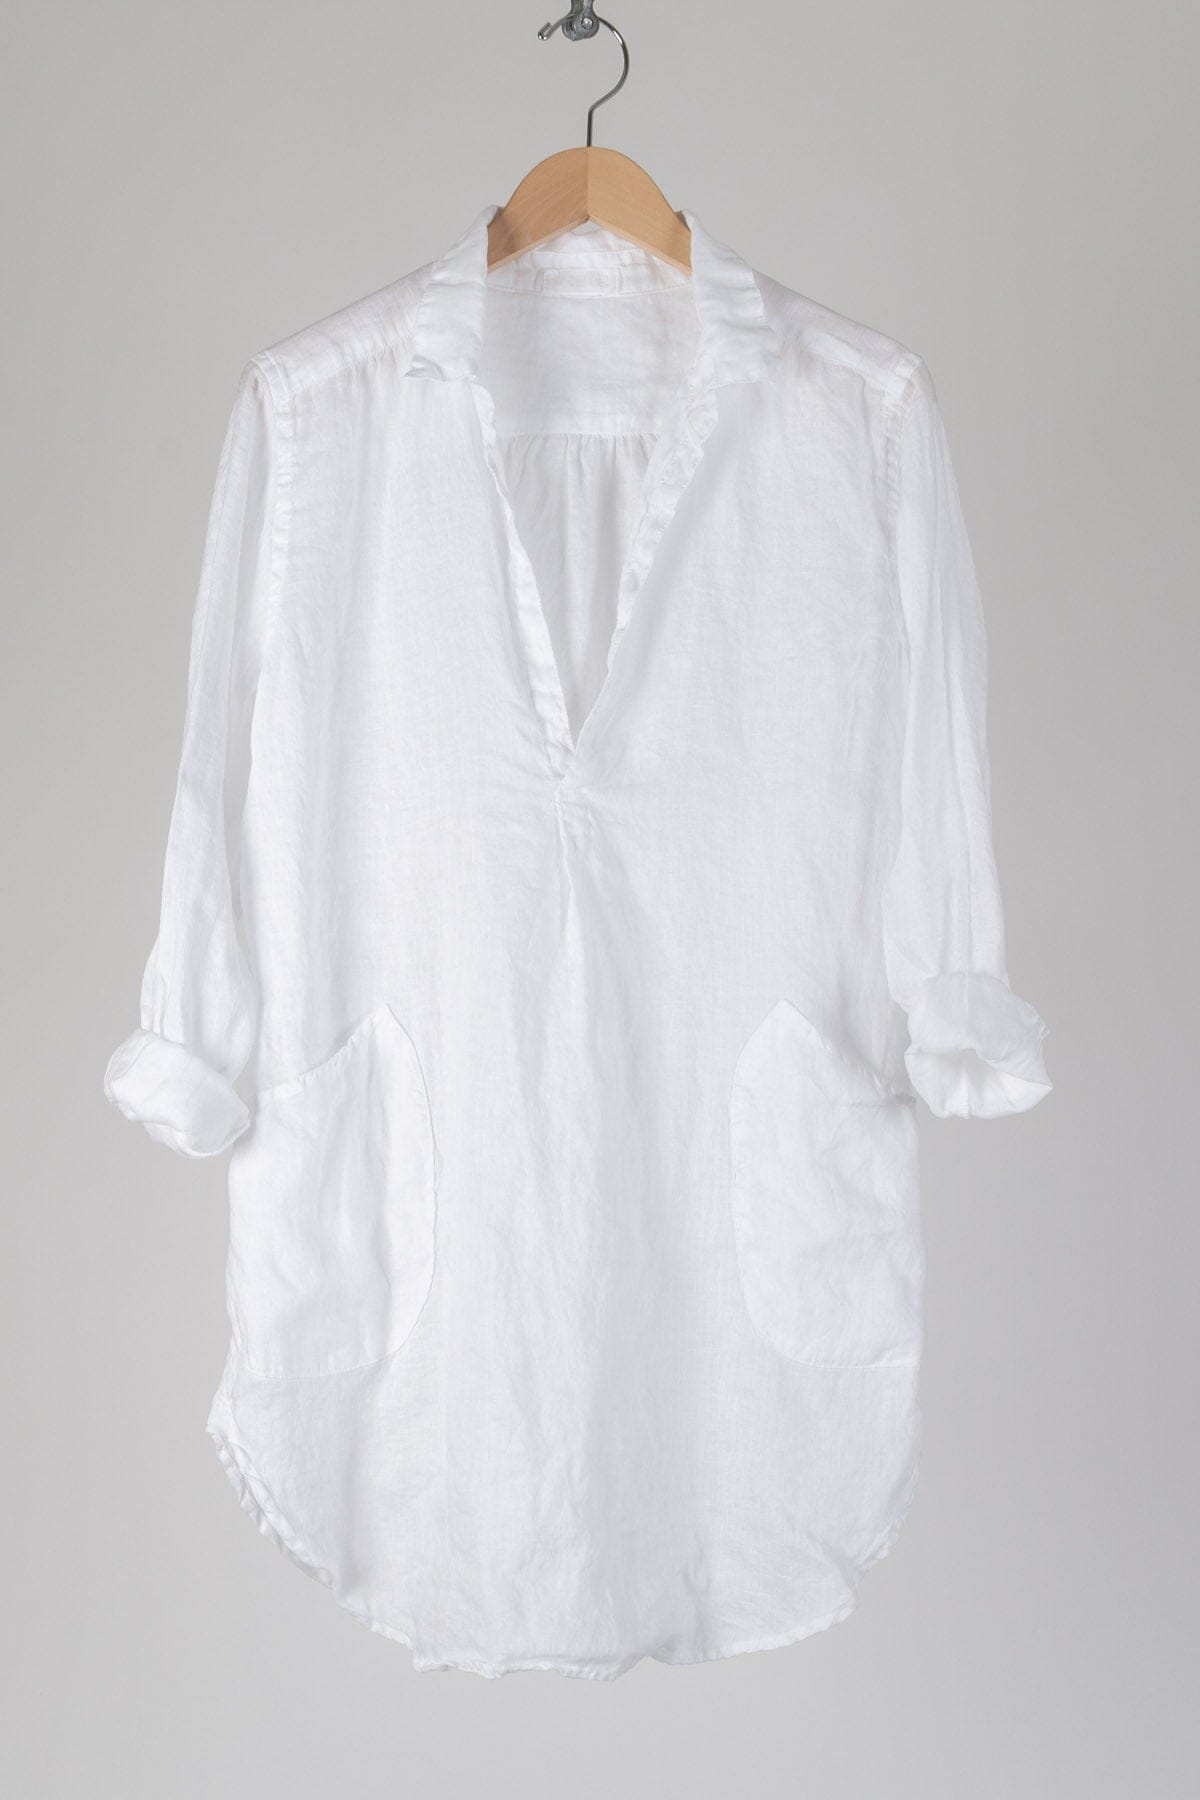 Teton - Linen S10 - Linen Shirt/Top/Tunic CP Shades white